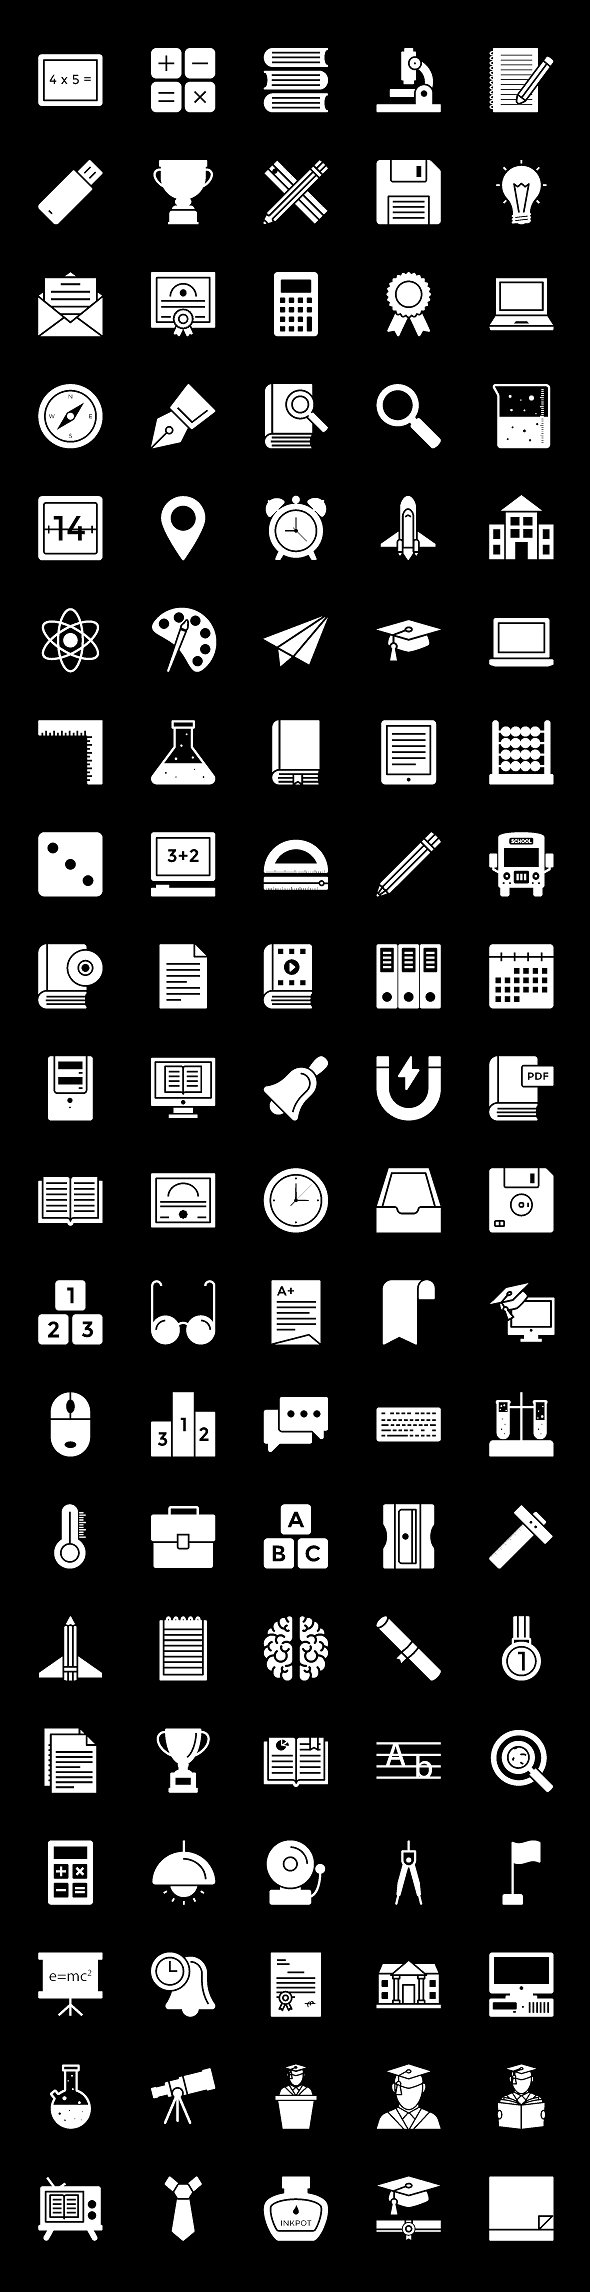 1200枚教育主题图标 Educational 1200 Icons Bundle Pack插图(8)